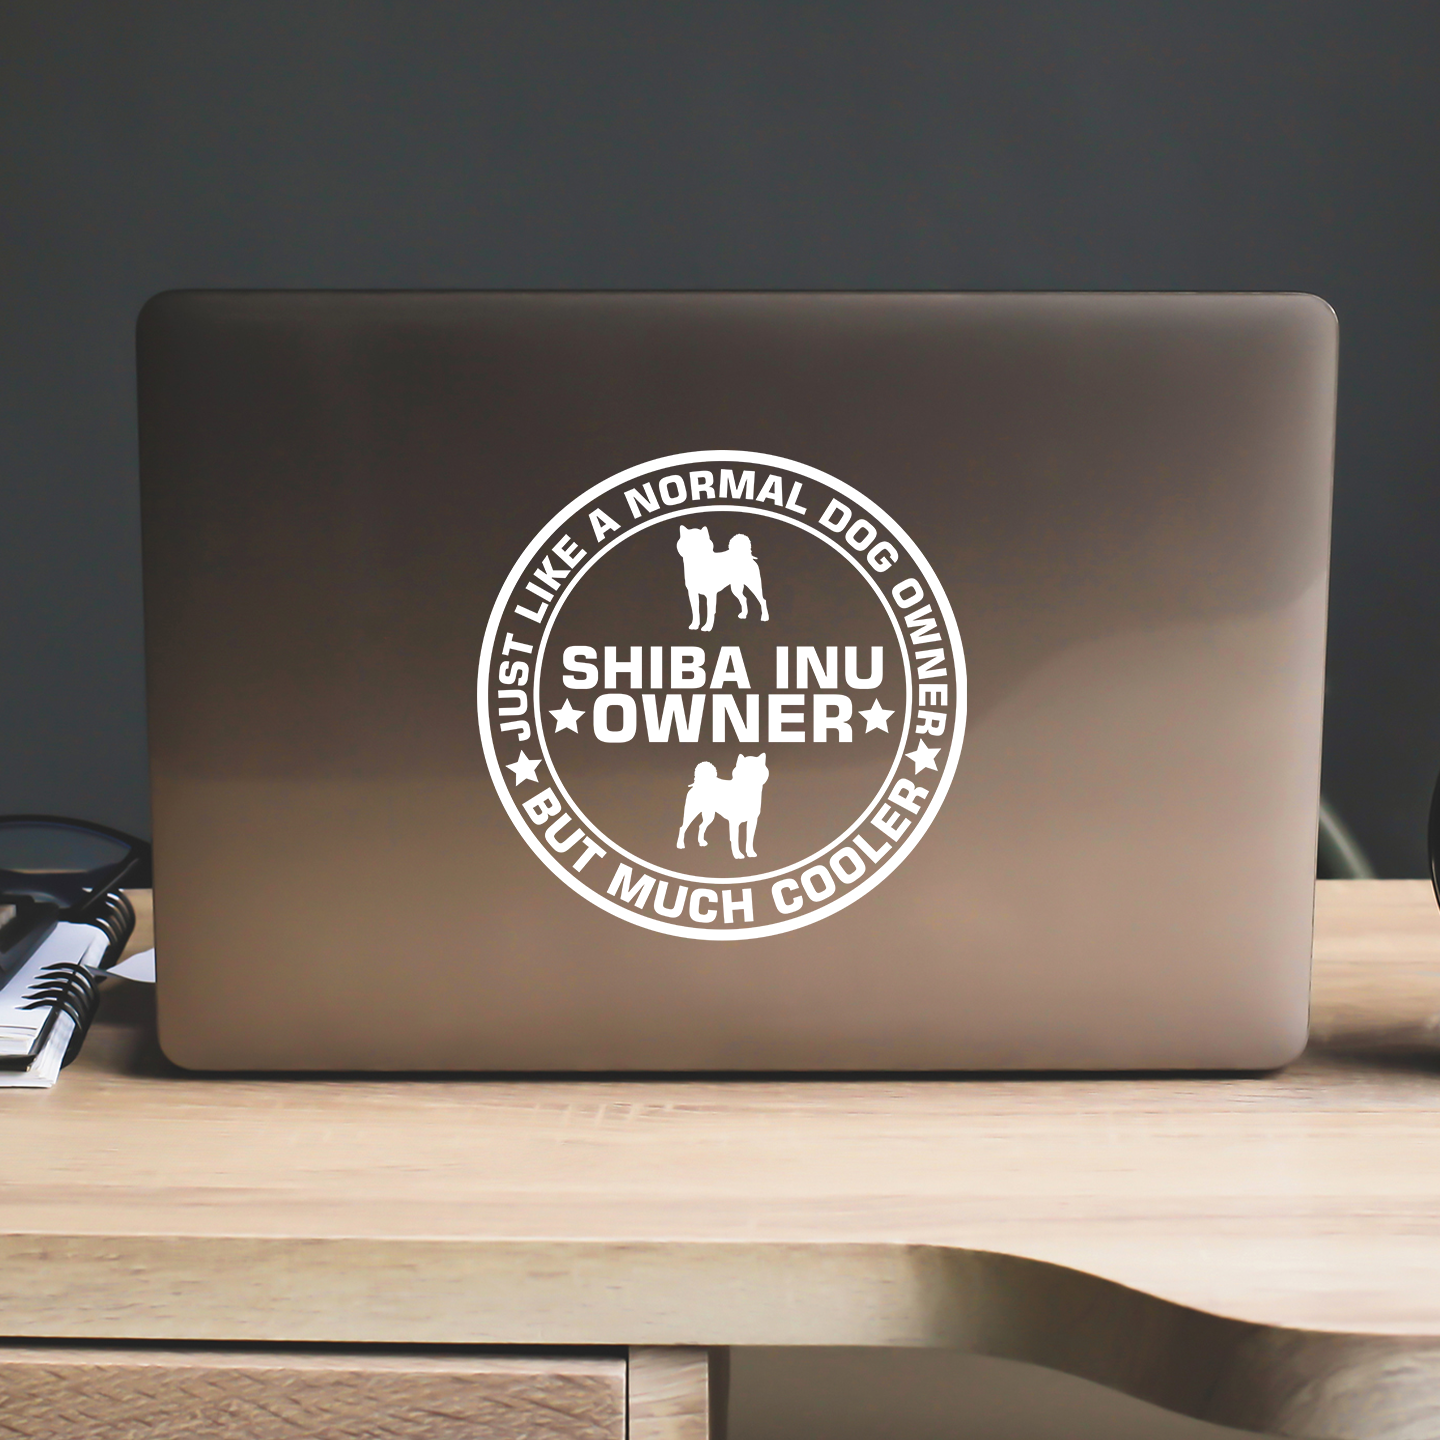 Shiba Inu Owner Sticker